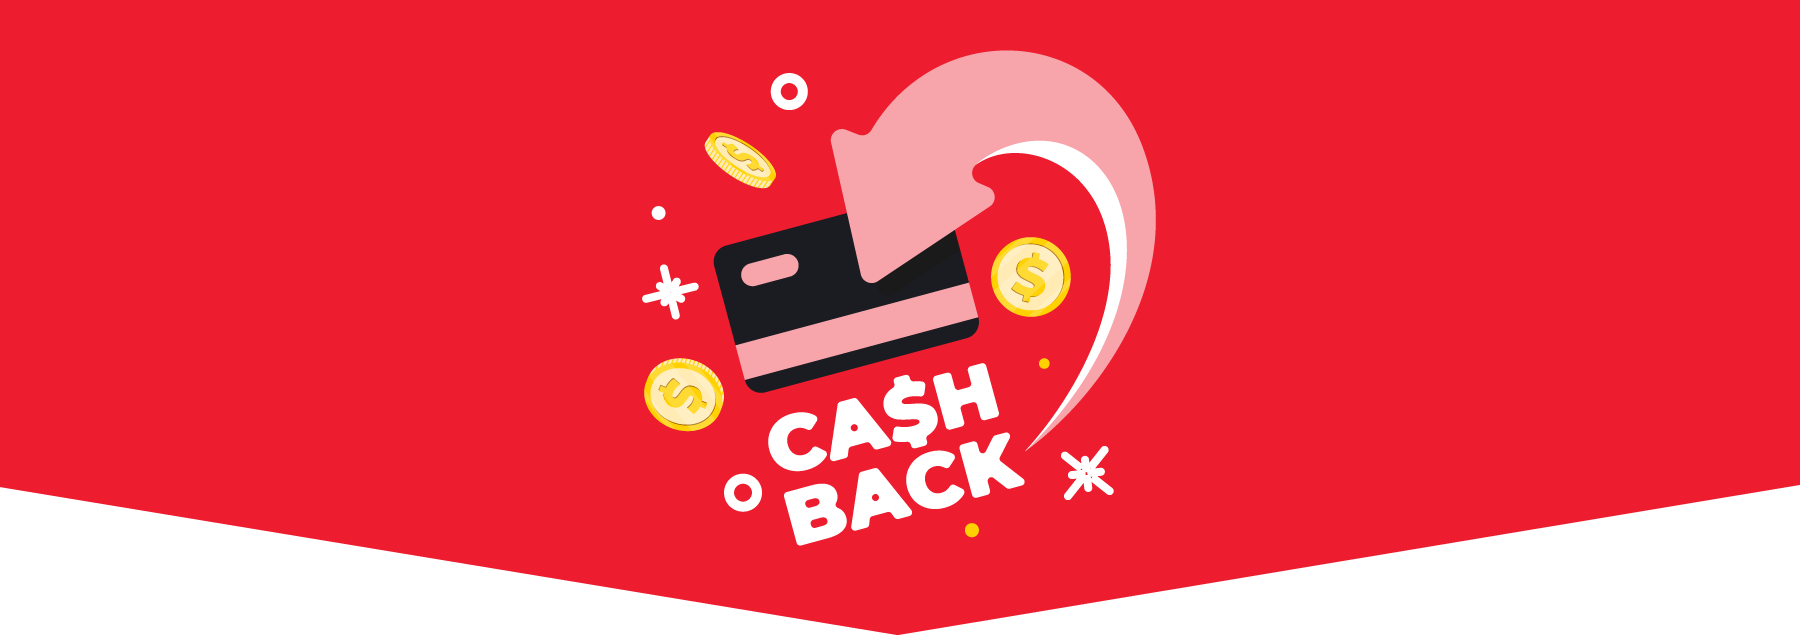 Casino Cashback Bonus Online Canada Casino 